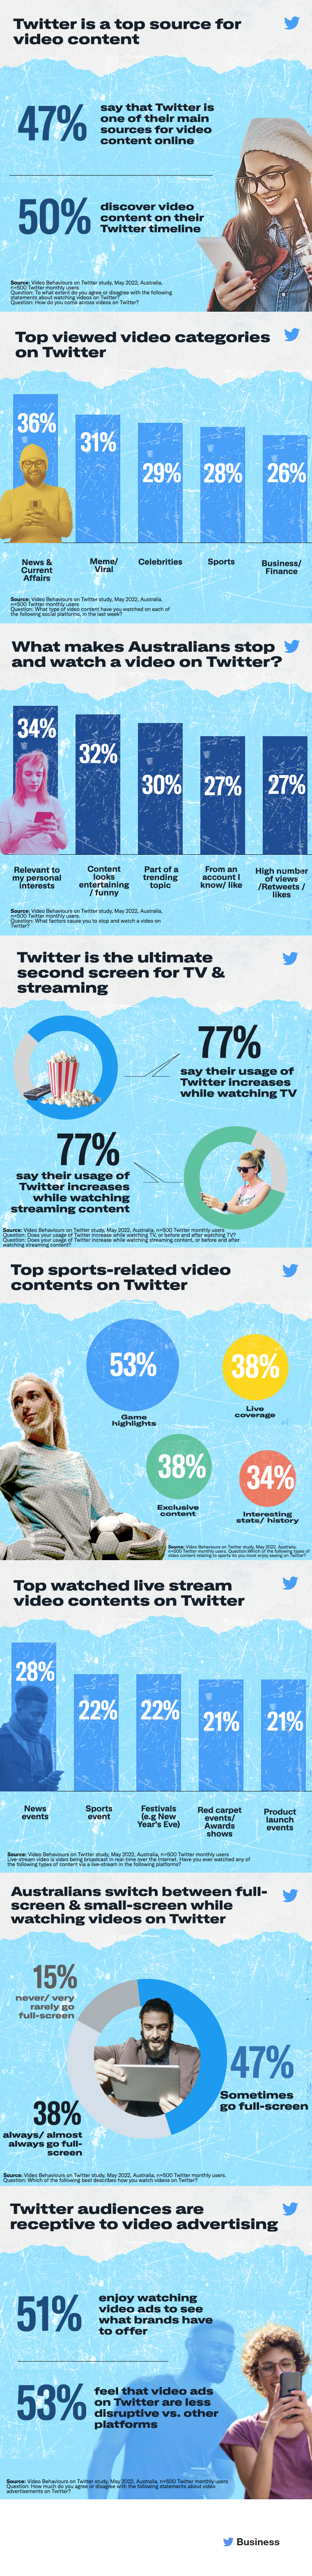 Twitter Australian video consumption research